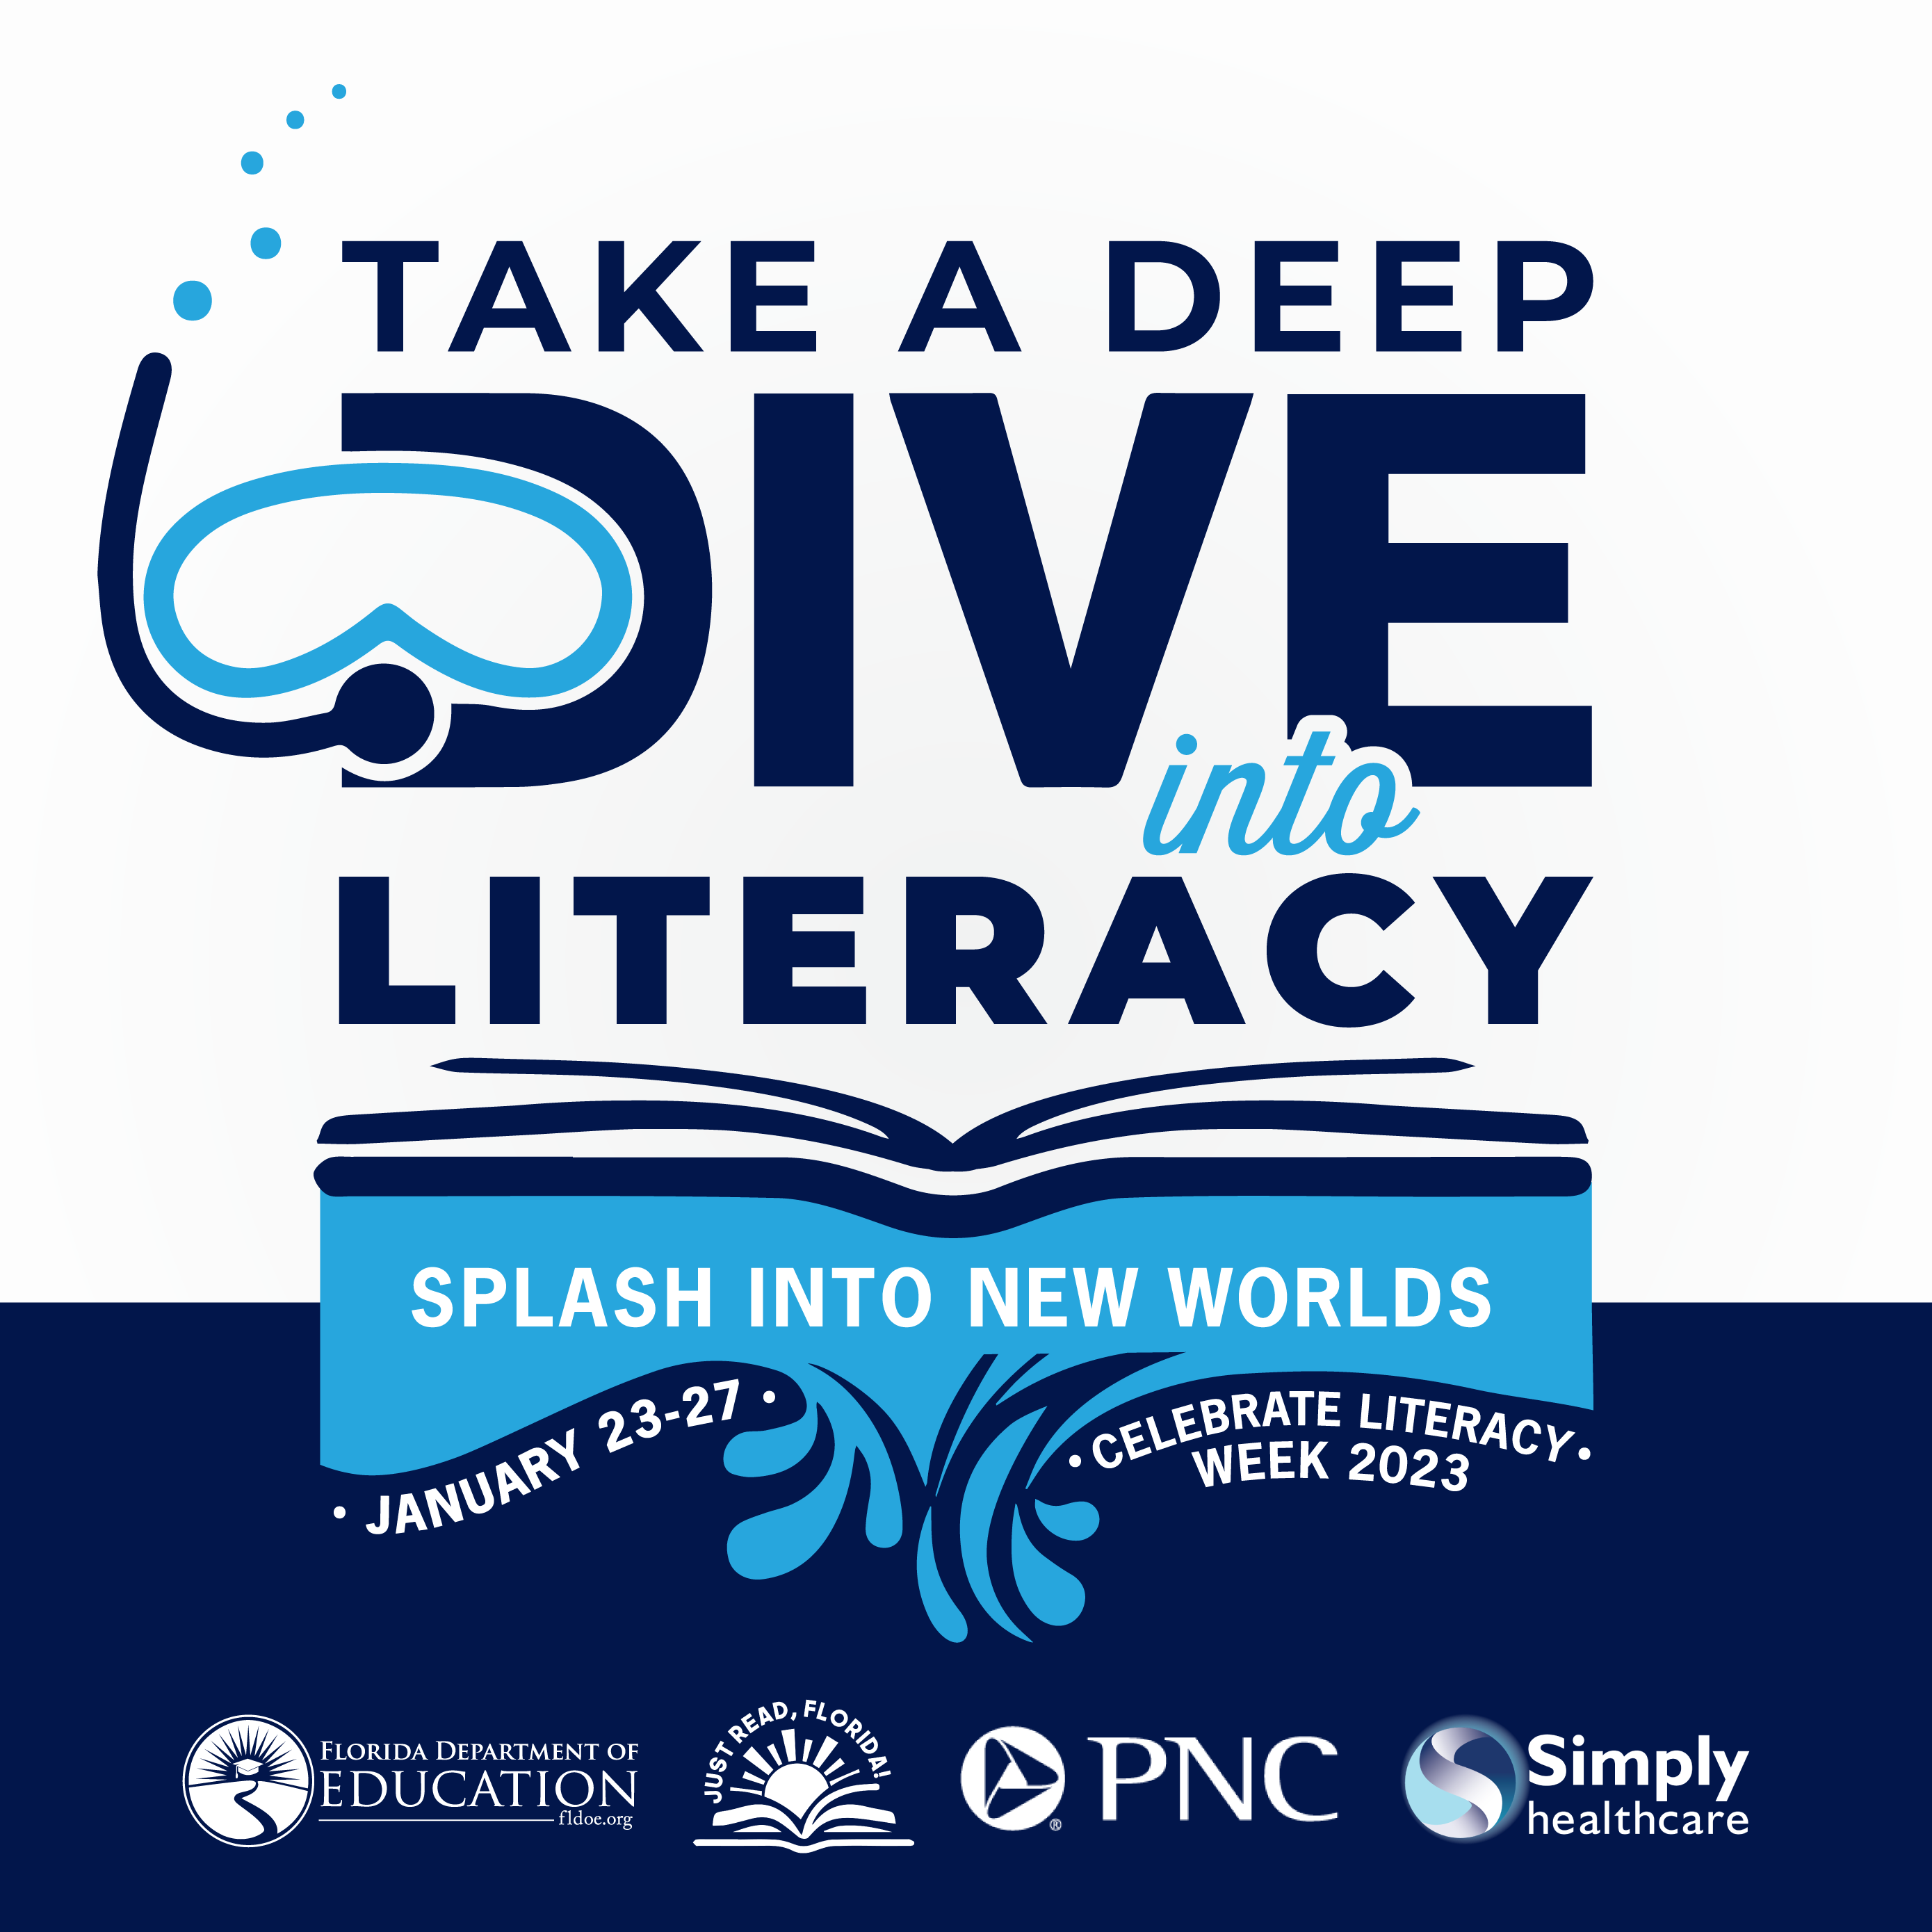 Take a deep dive into literacy. Splash into new worlds. January 23-27, 2022. Celebrate Literacy Week 2023